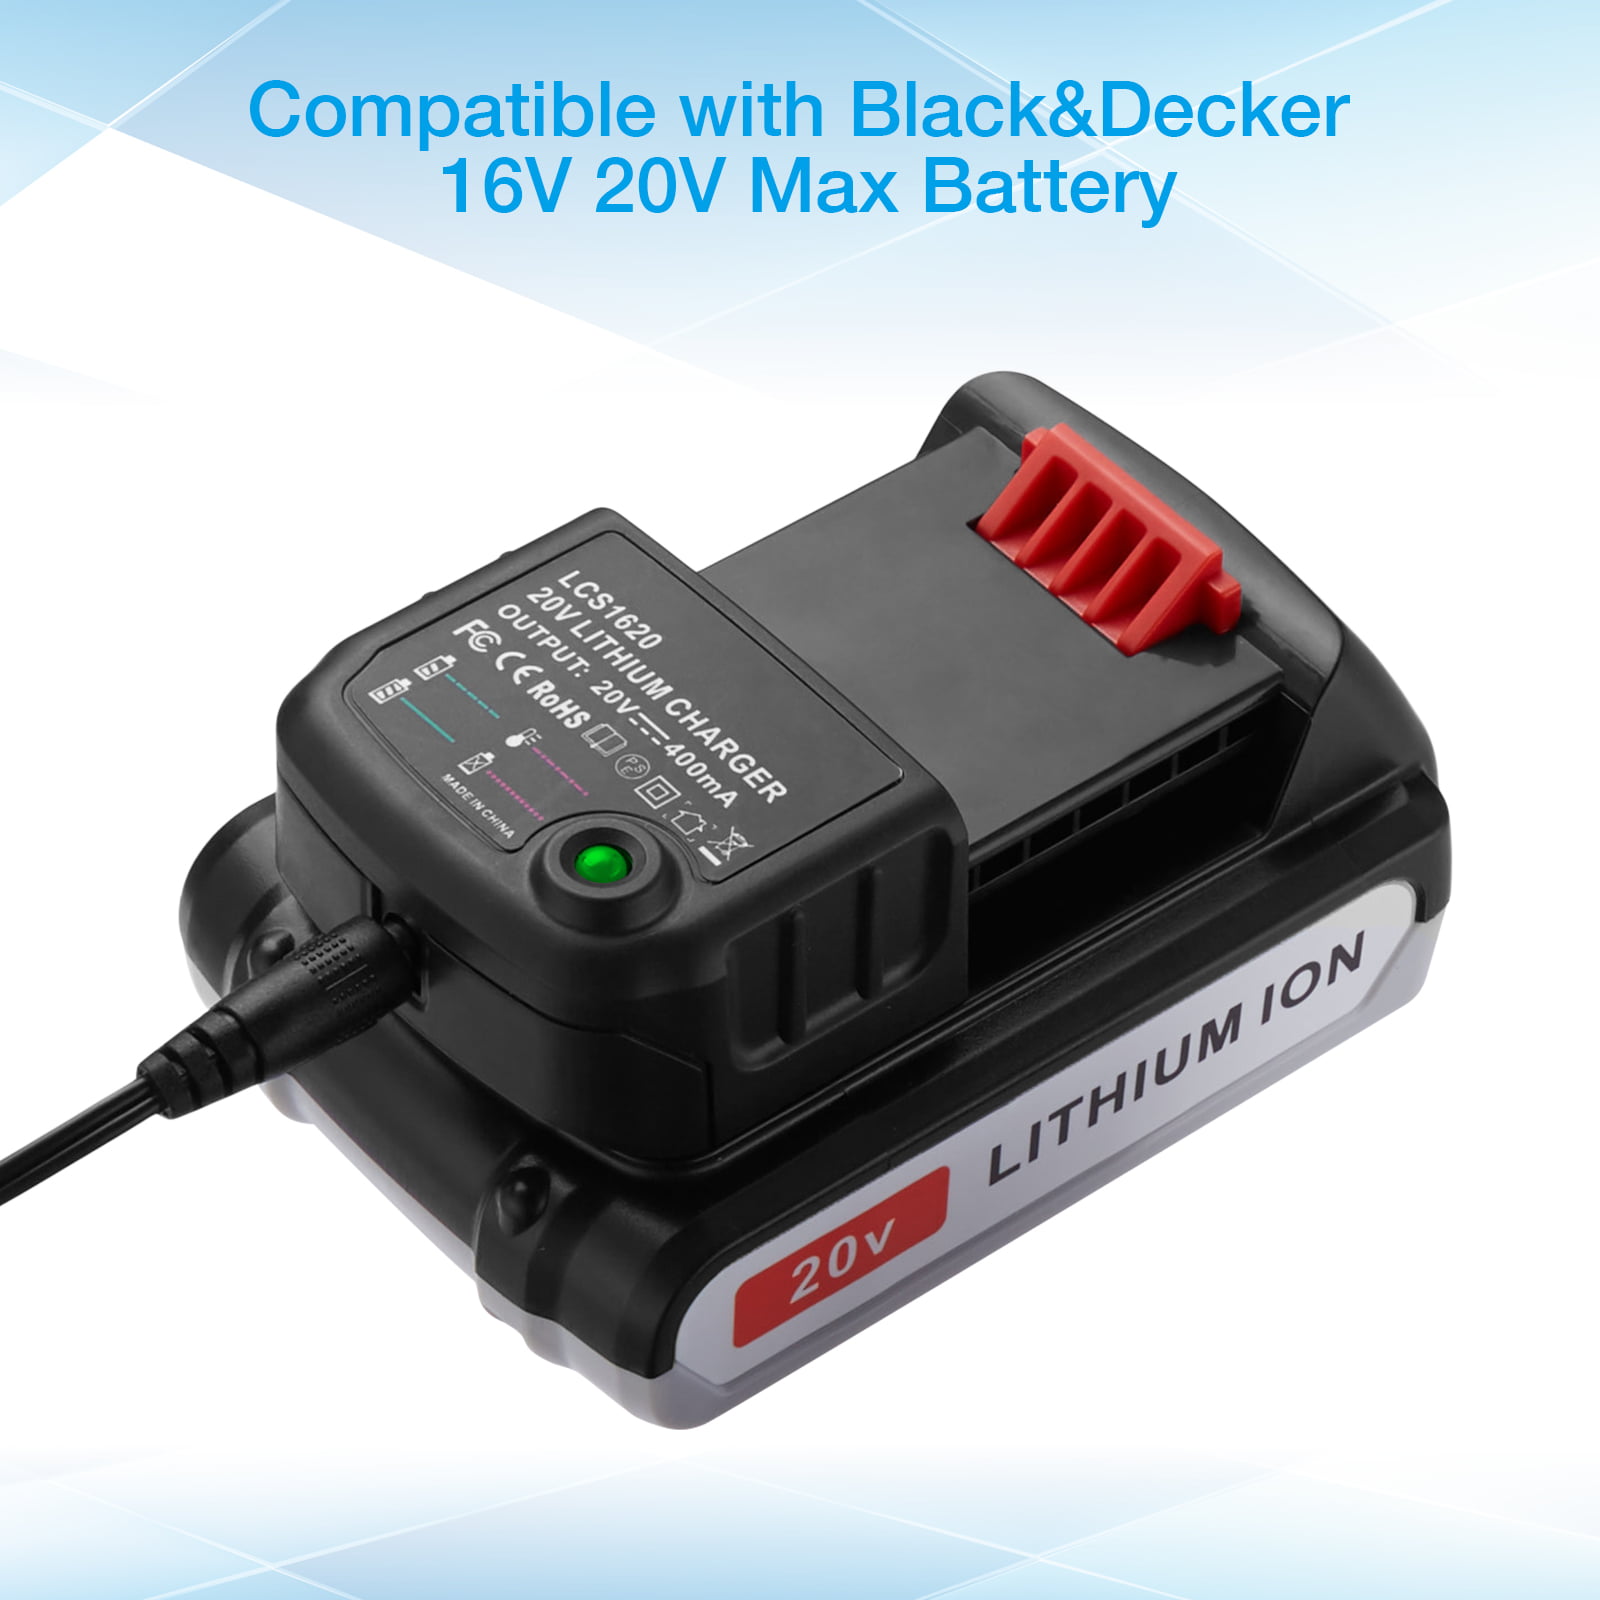 BLACK+DECKER 20V MAX Lithium Battery & Charger (LBXR20CK) 